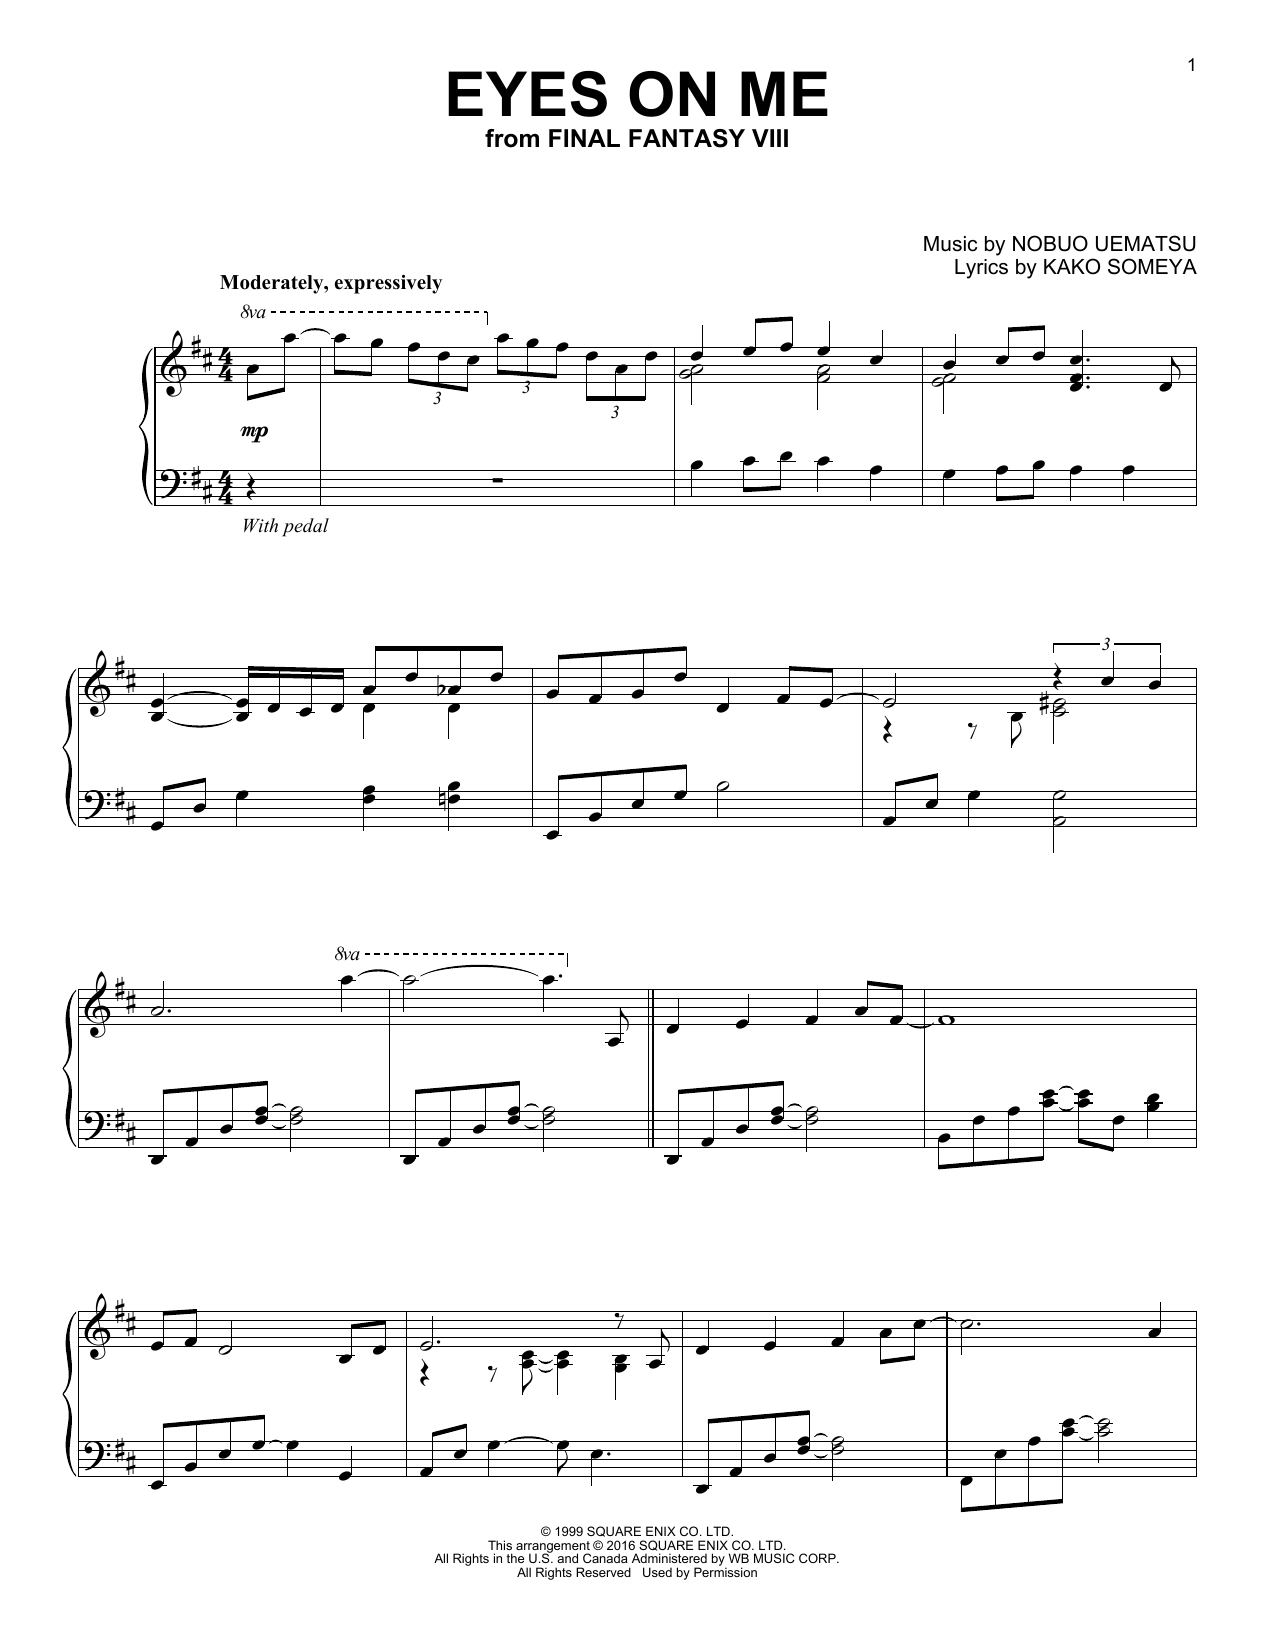 Kako Someya & Nobuo Uematsu Eyes On Me (from Final Fantasy VIII) Sheet Music Notes & Chords for Easy Piano - Download or Print PDF